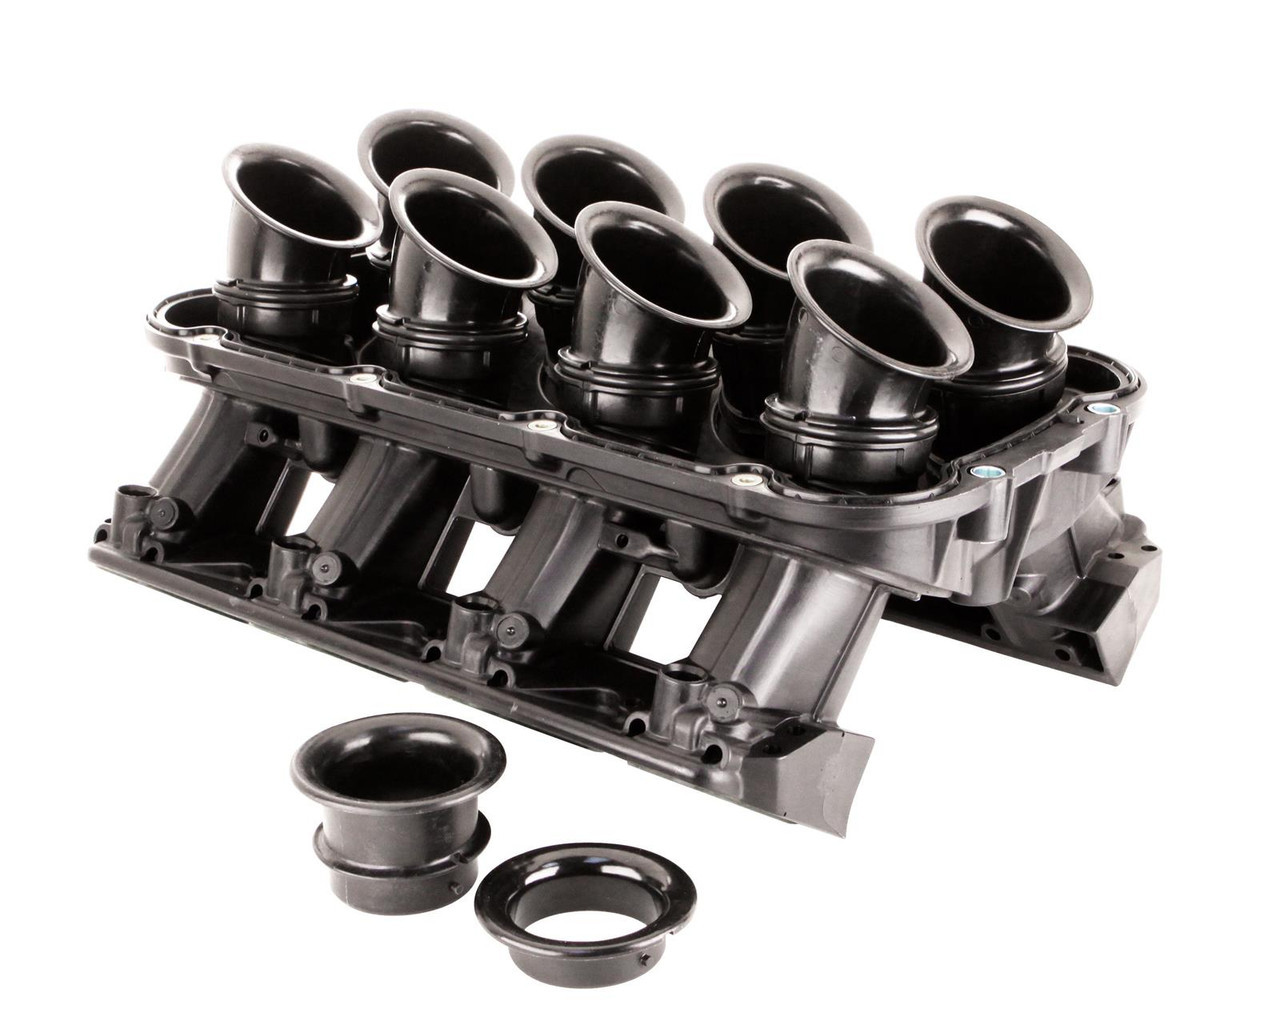 Performance Design Carbon pTR LS1 Intake Manifold for Cathedral Port LS Engines LS2 LS6 LQ4 LQ9 L33 LH6 LC9 - Black Flange